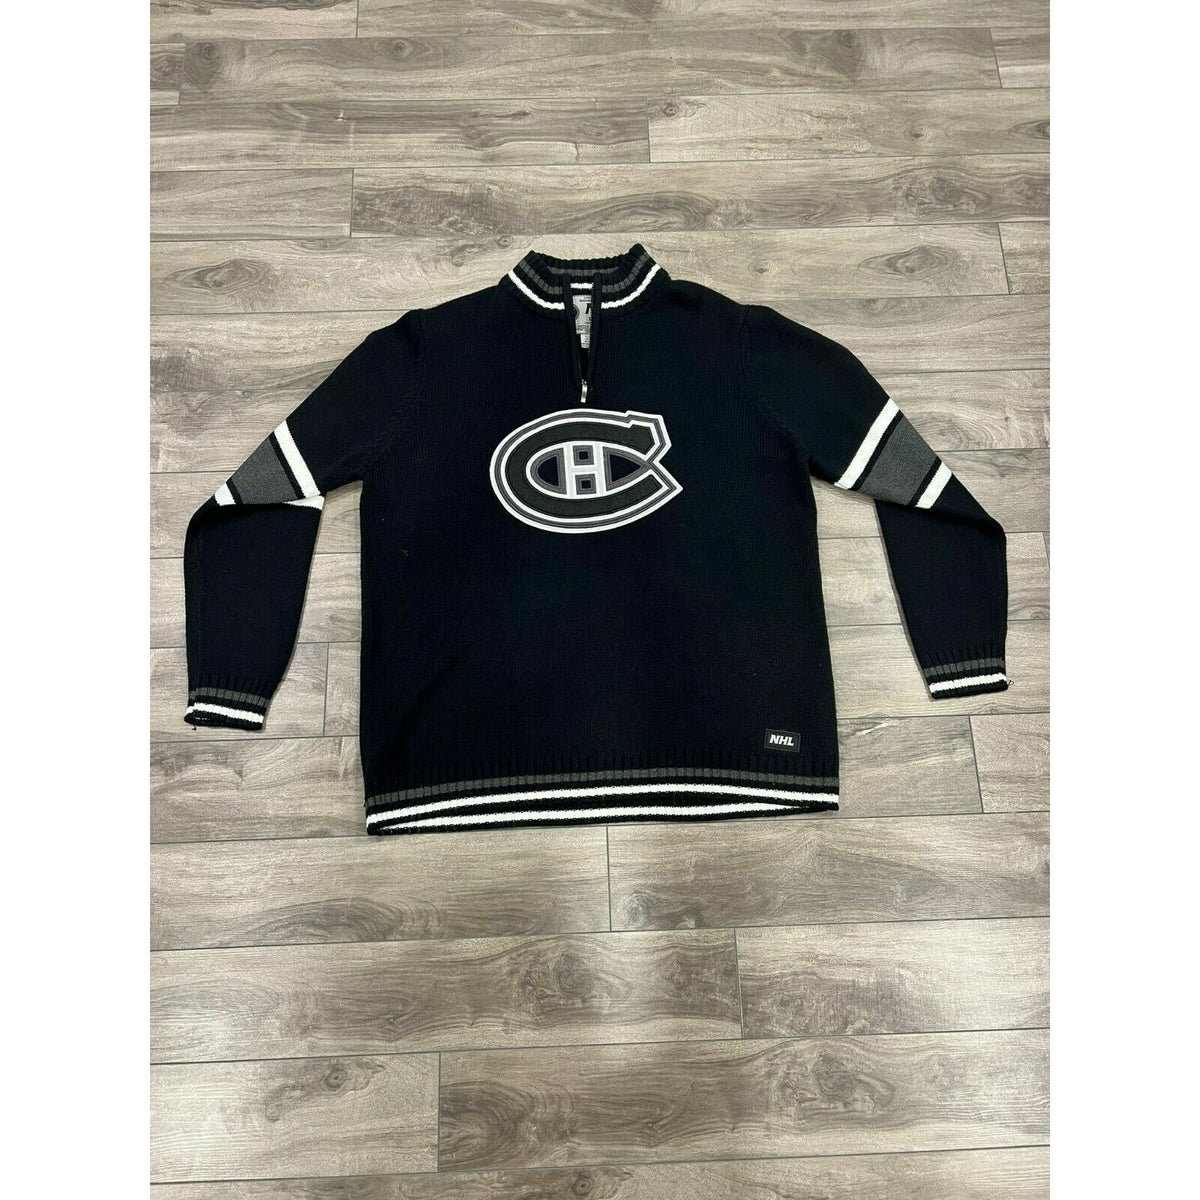 ILANCO National Hockey League Montreal Canadiens NHL Cardigan Sweater NEW  Sz. XL